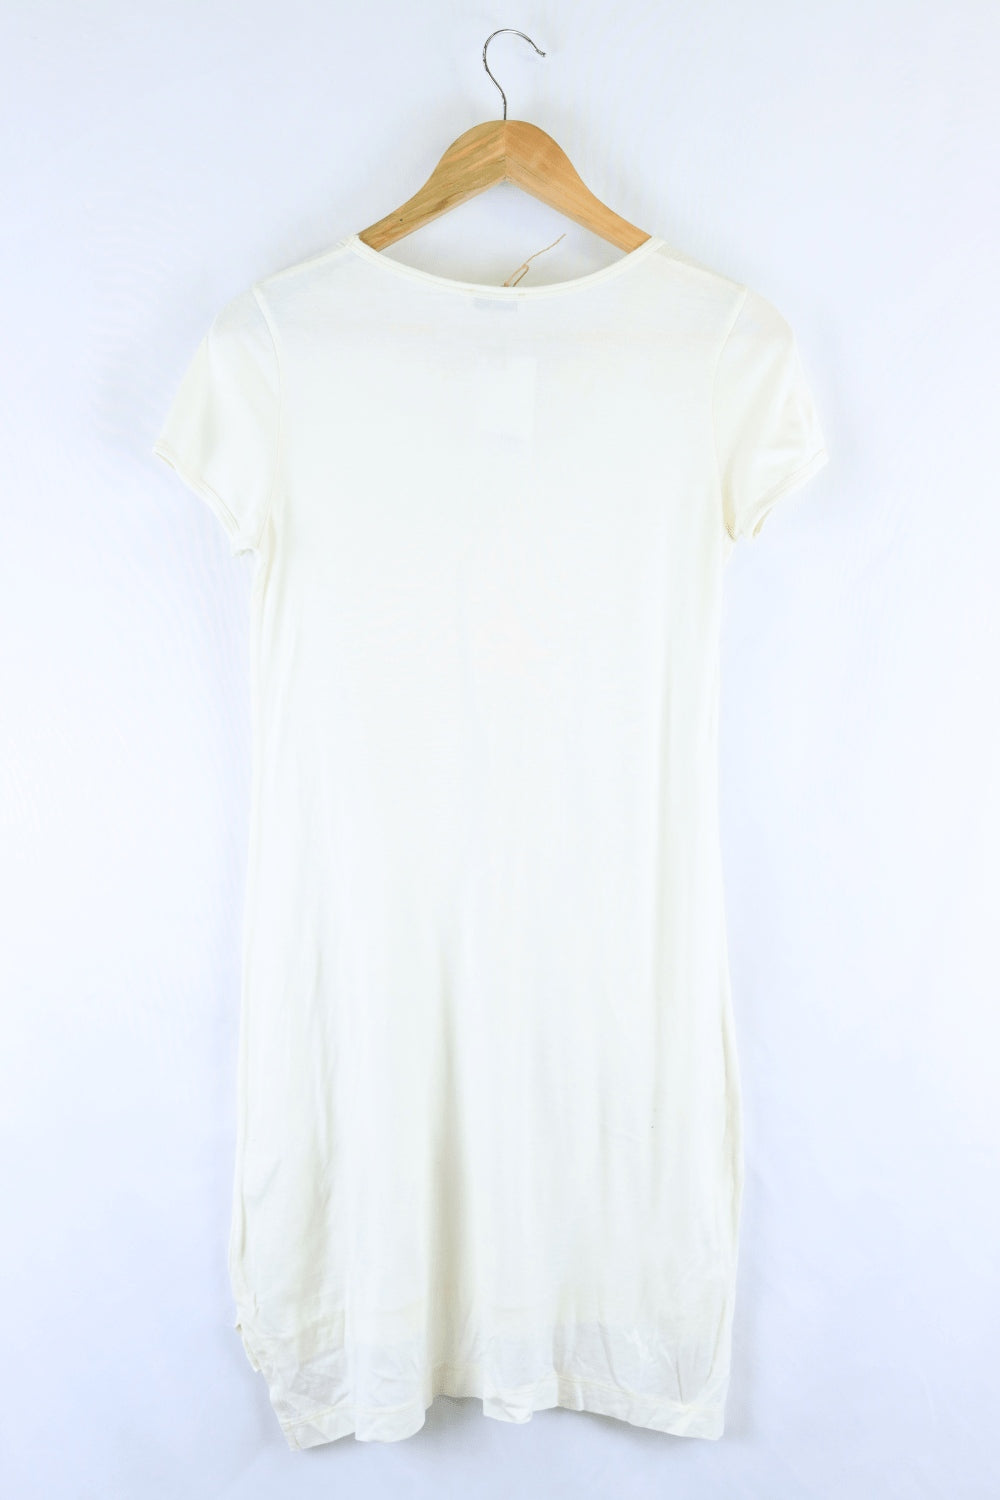 Kookai White Long T-shirt 1 (10) - Reluv Clothing Australia